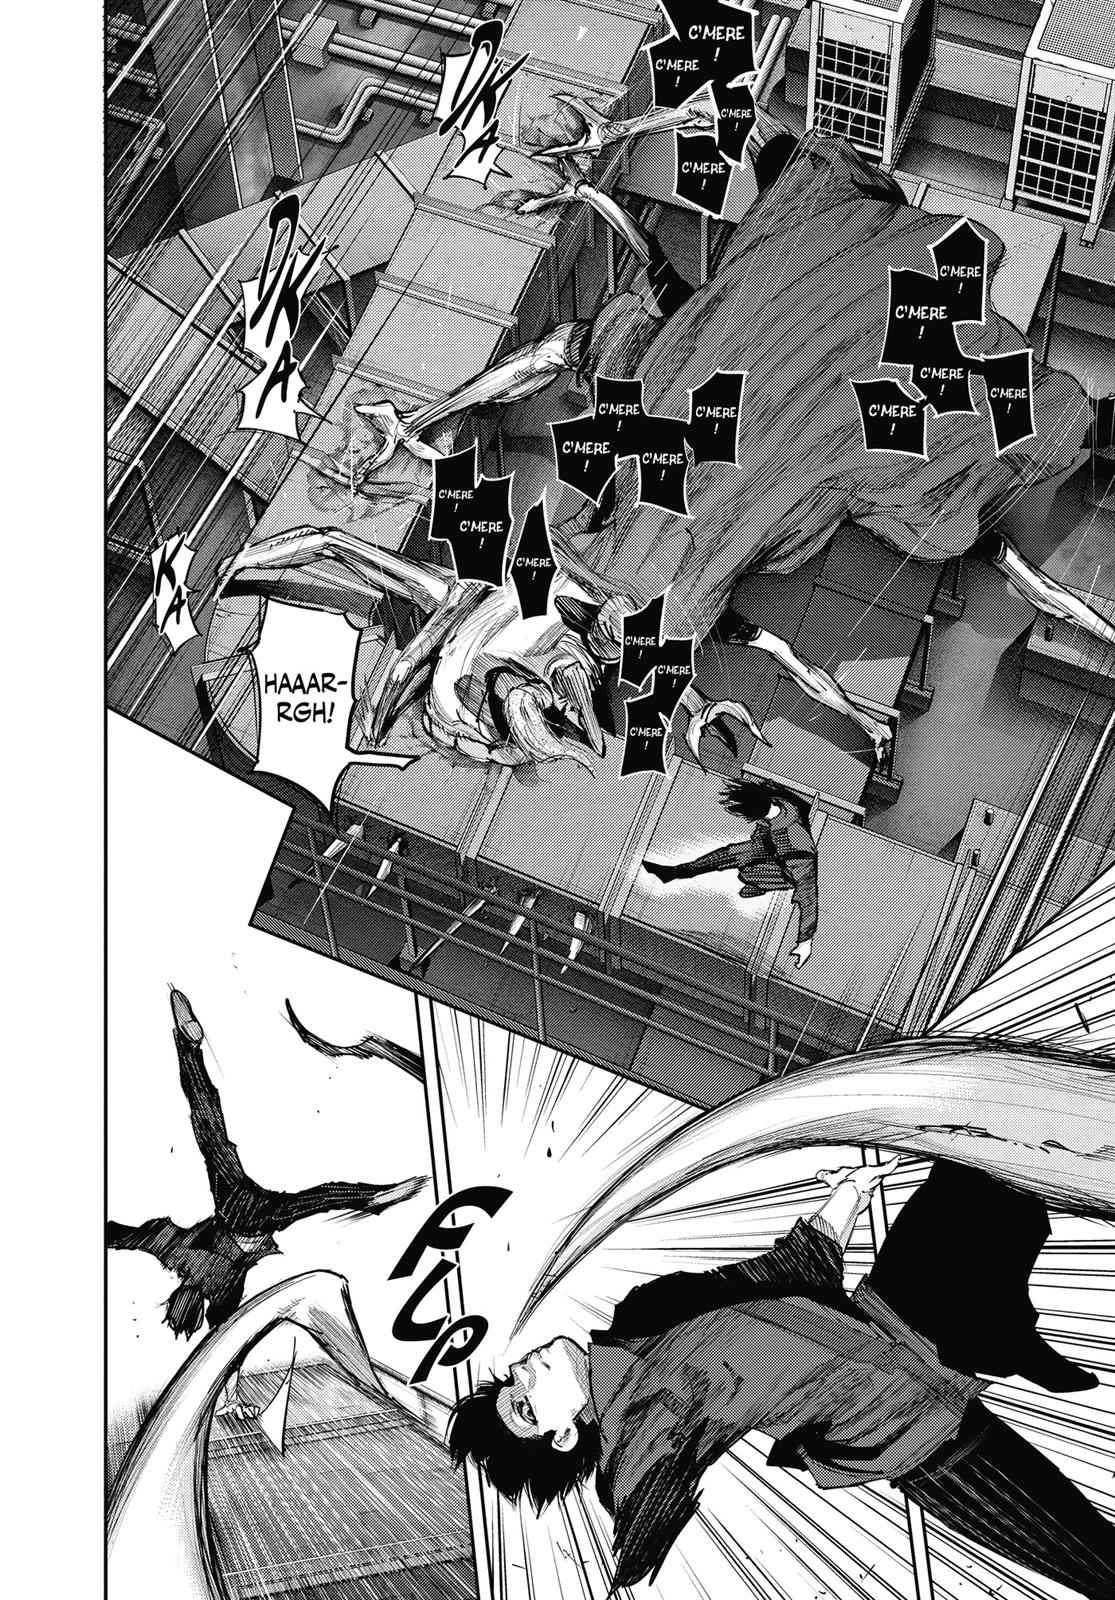 Baca Manga Chainsaw Man Chapter 145 Sub Indo, Spoiler Raw Scan